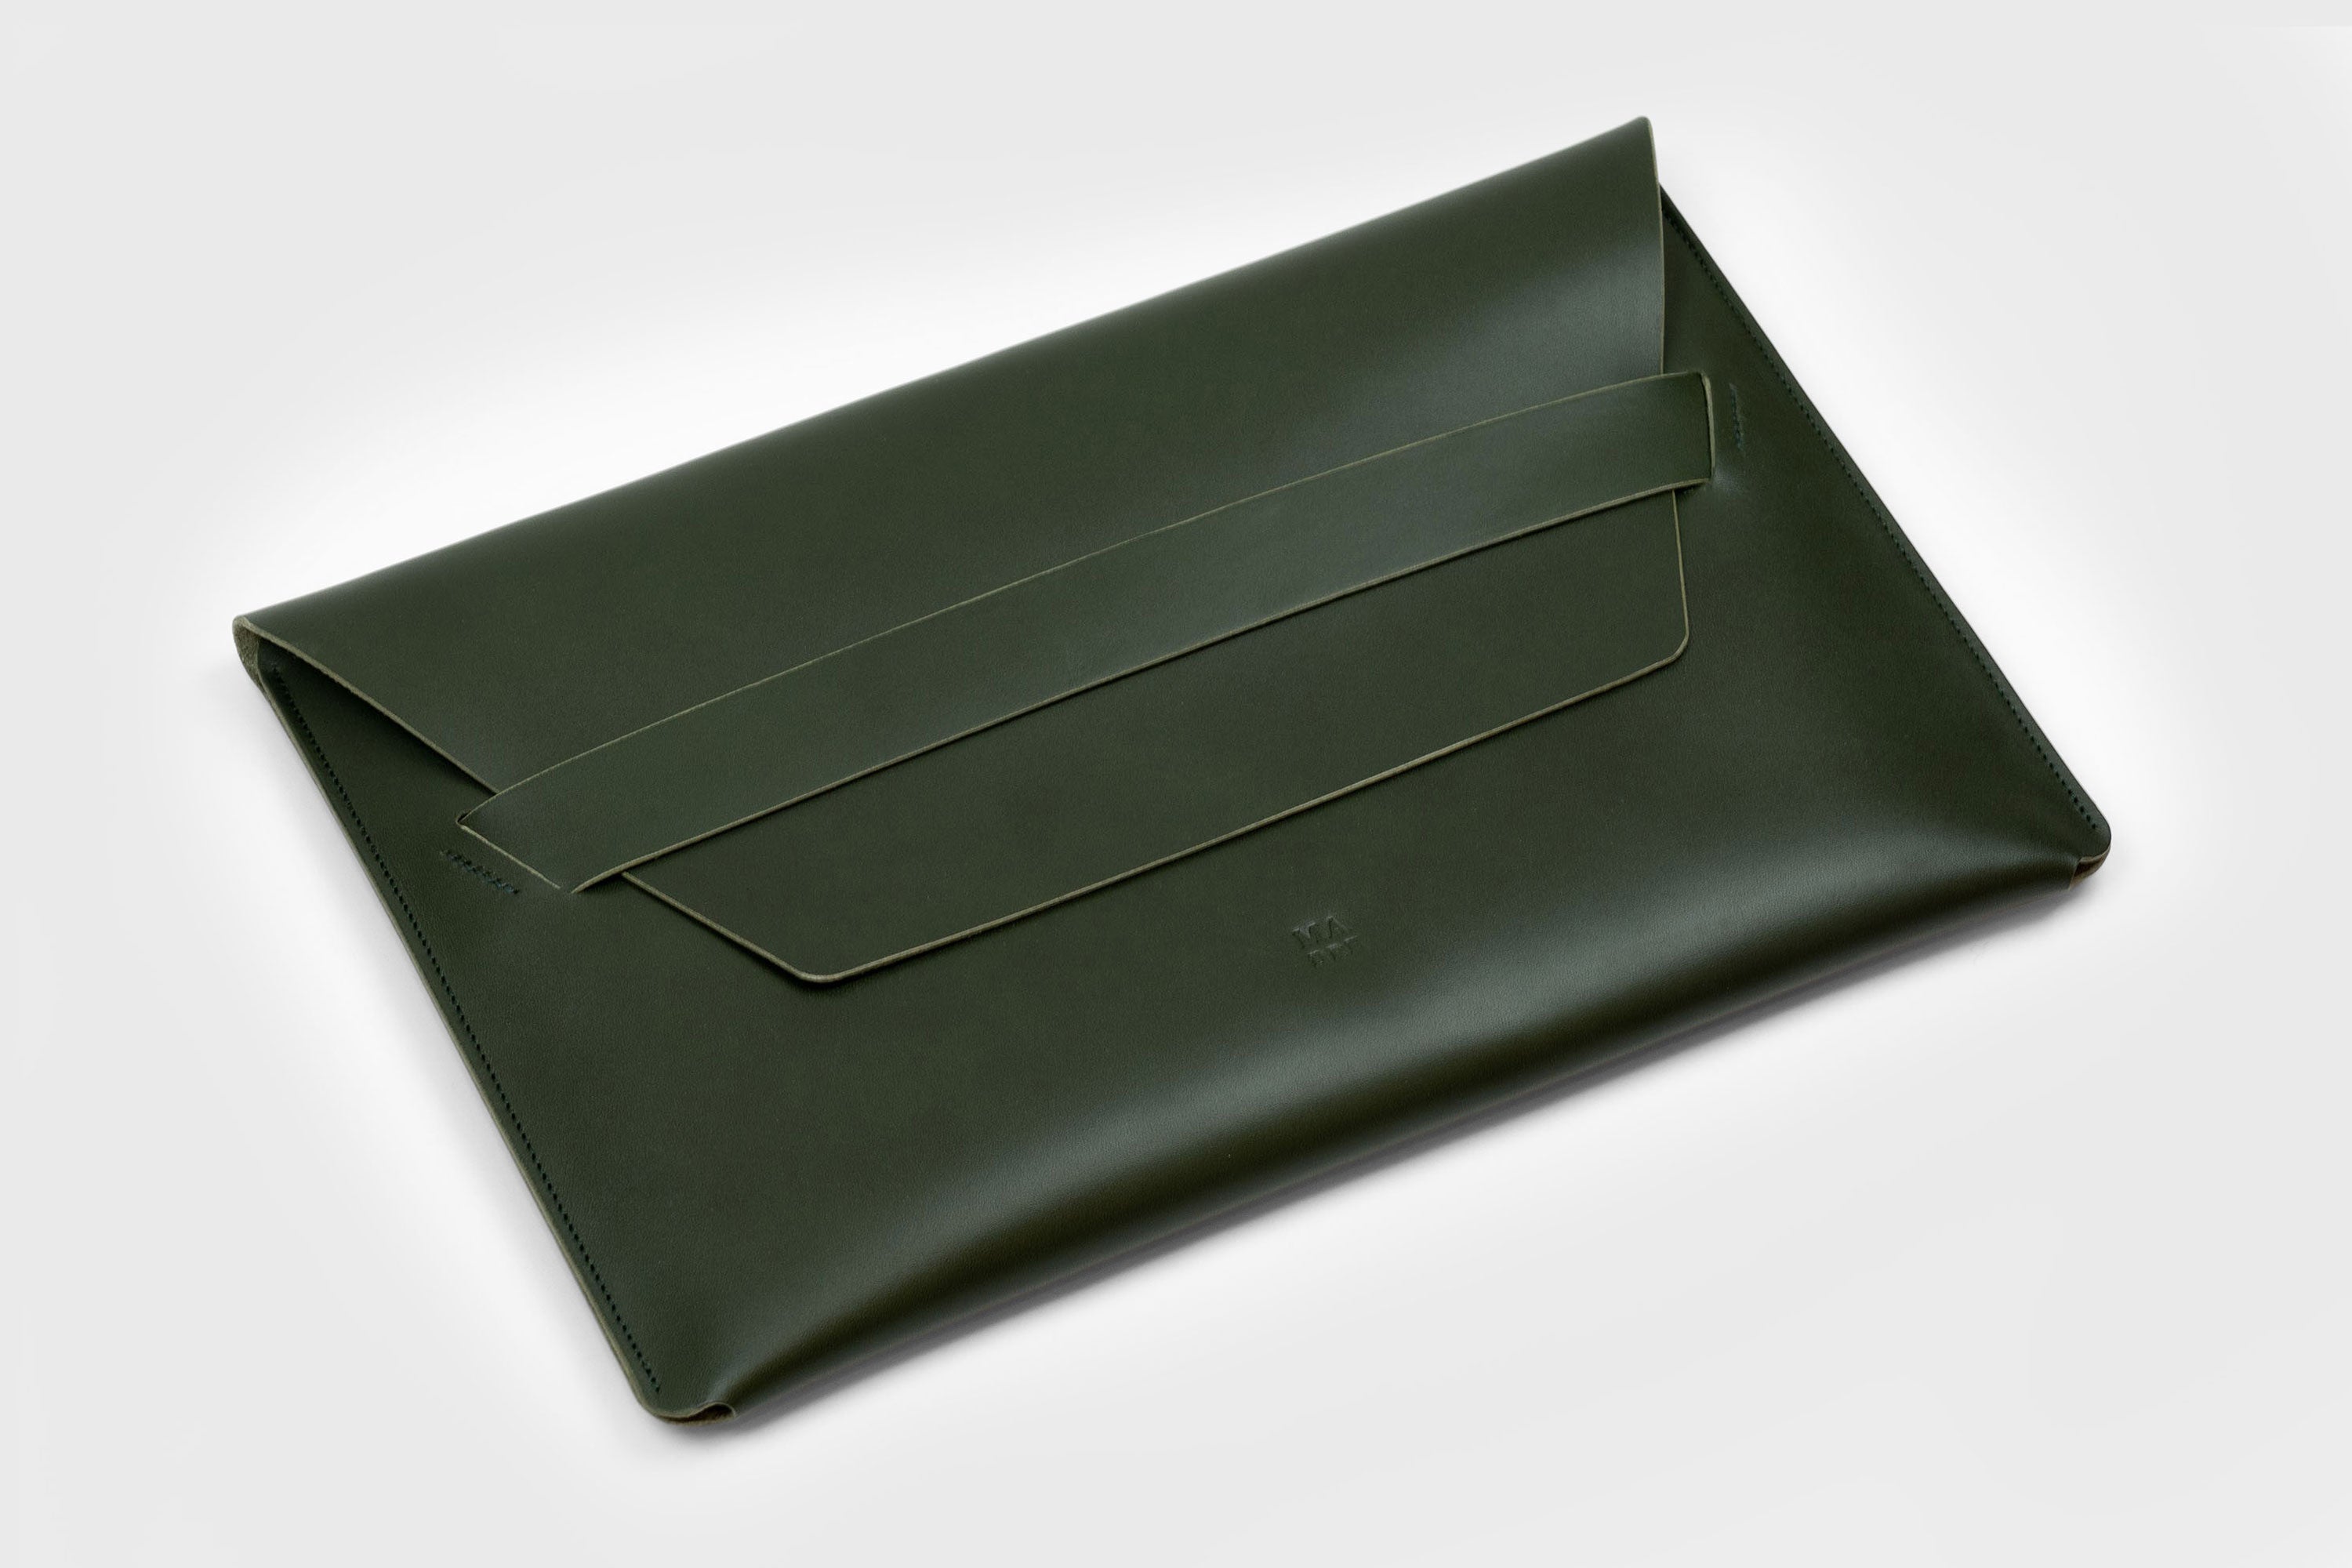 Leather Sleeve Olive Green for MacBook Air 11 Inch Premium Minimalist Sleek Design Atelier Madre Manuel Dreesmann Barcelona Spain